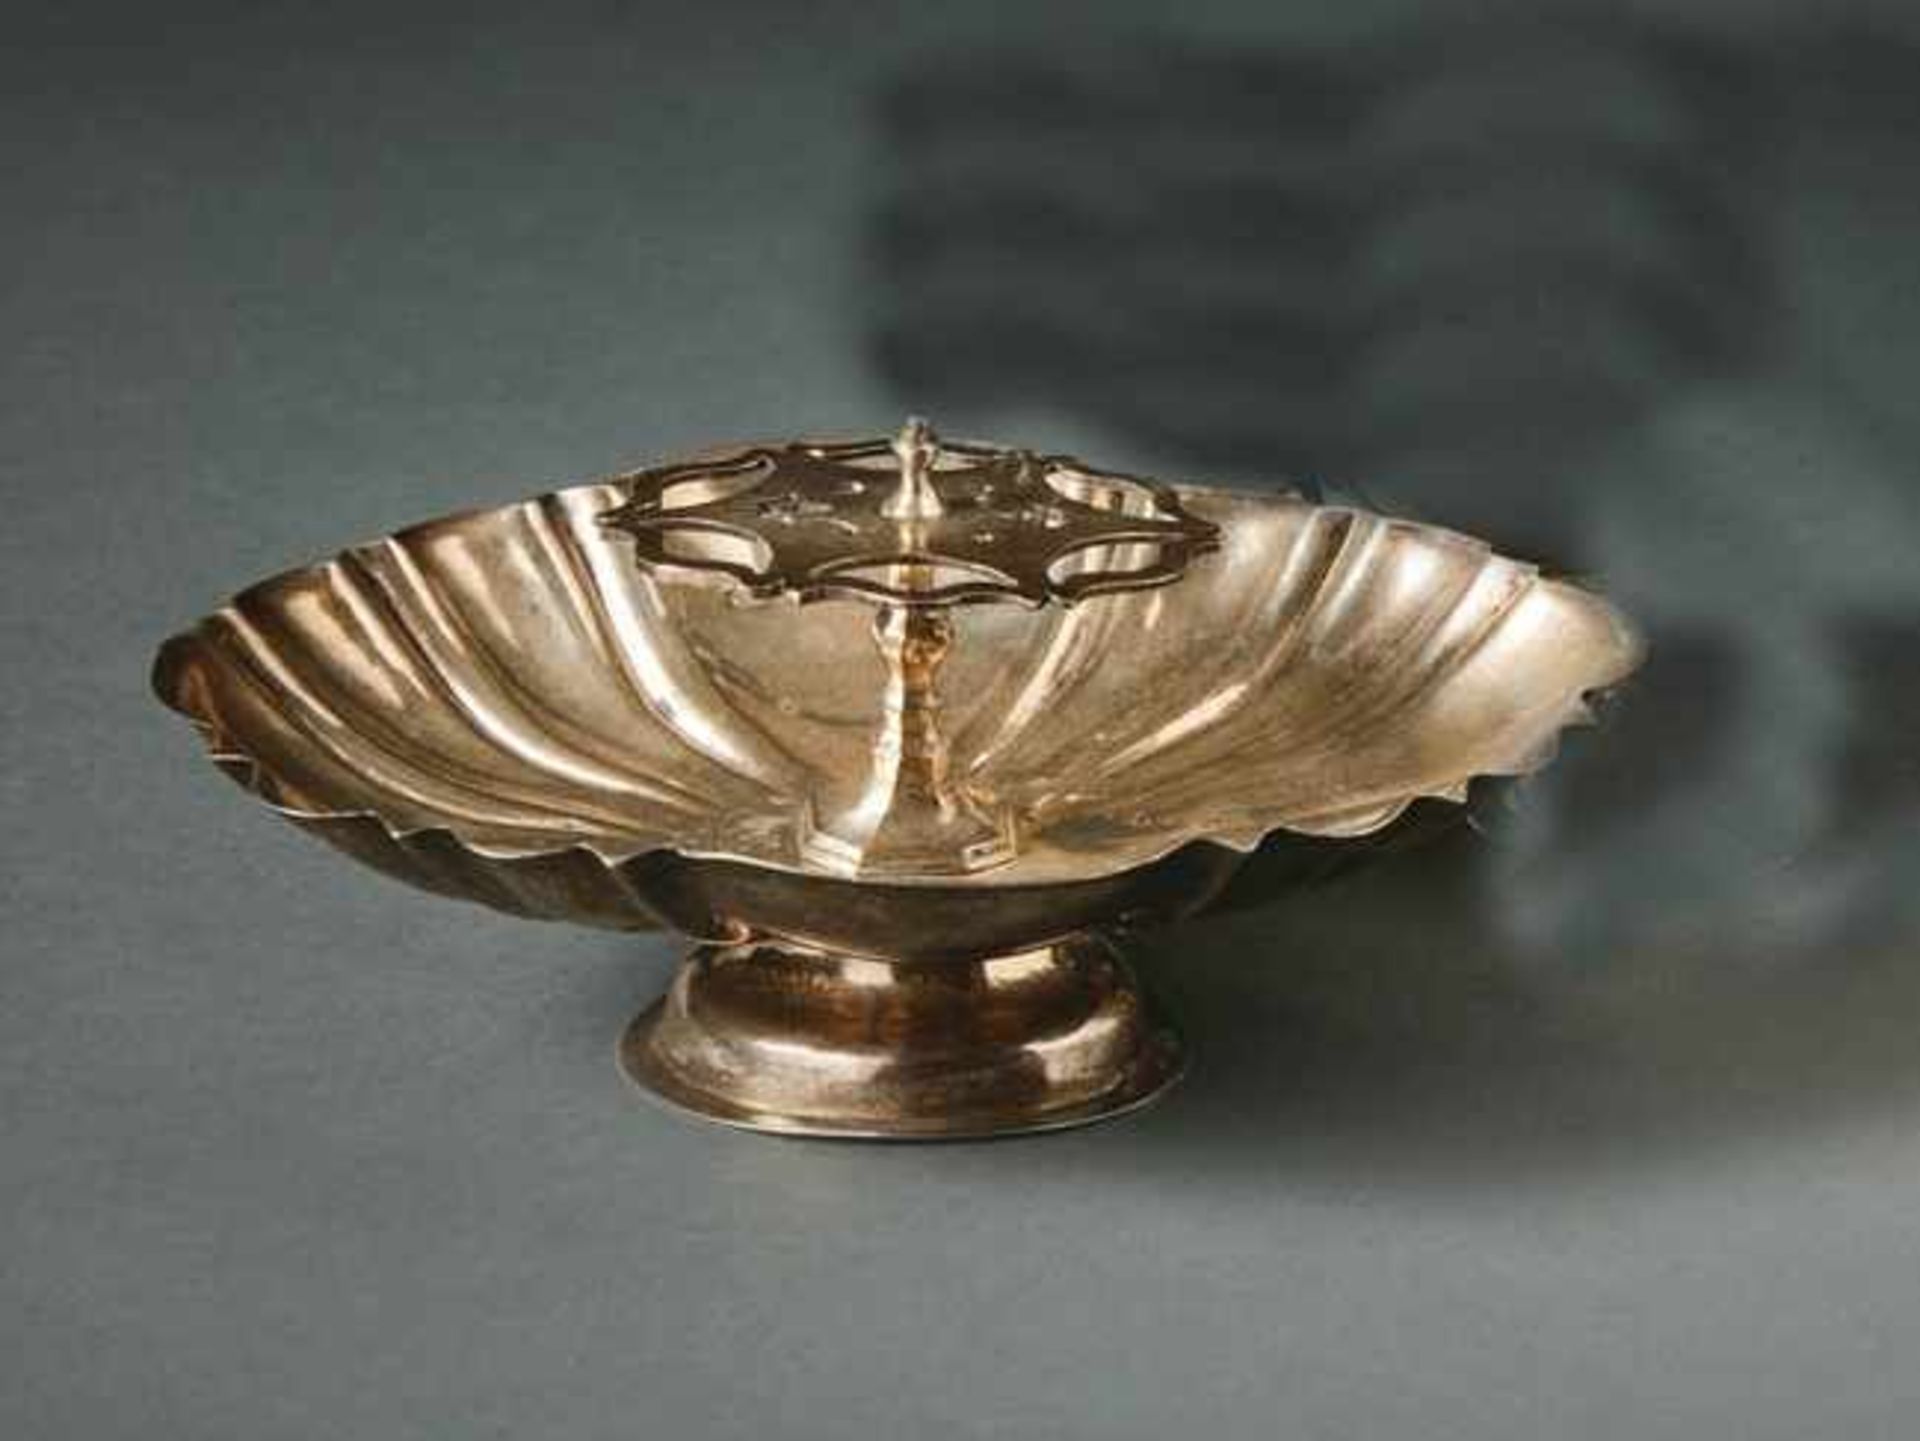 Candy bowl with spoon holderAugsburg, 1743-45Johann Leonhard Allmann (Mstr. 1733-75). Over a round